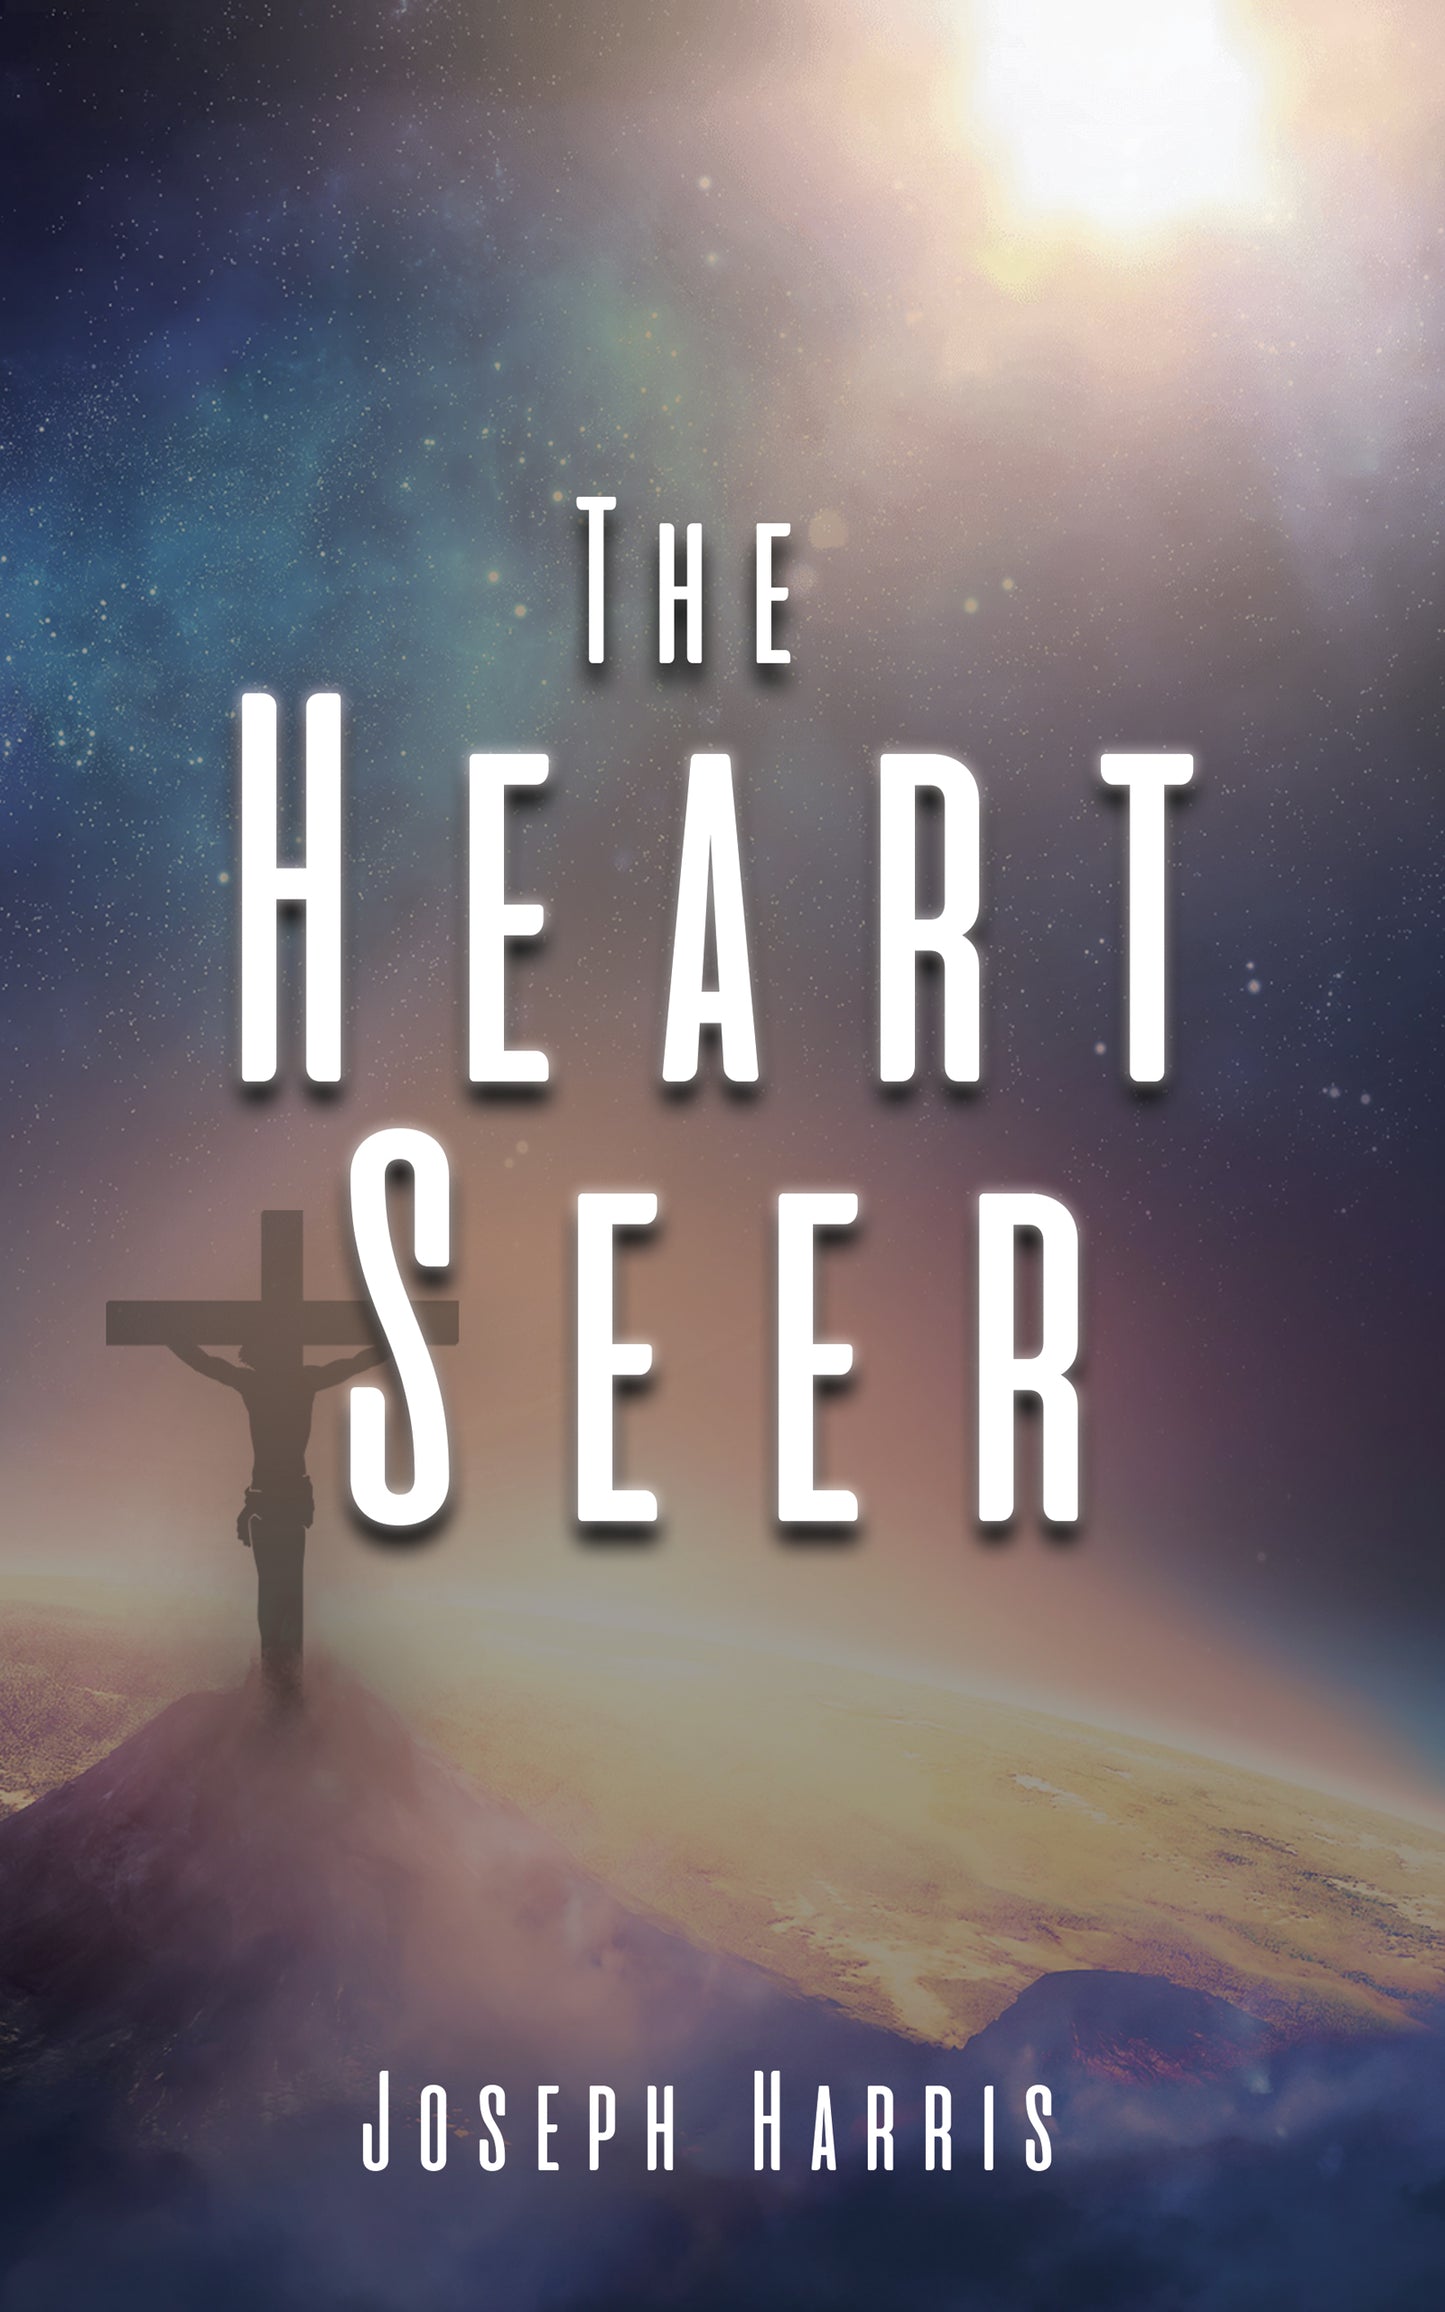 The Heart Seer - Joseph Harris